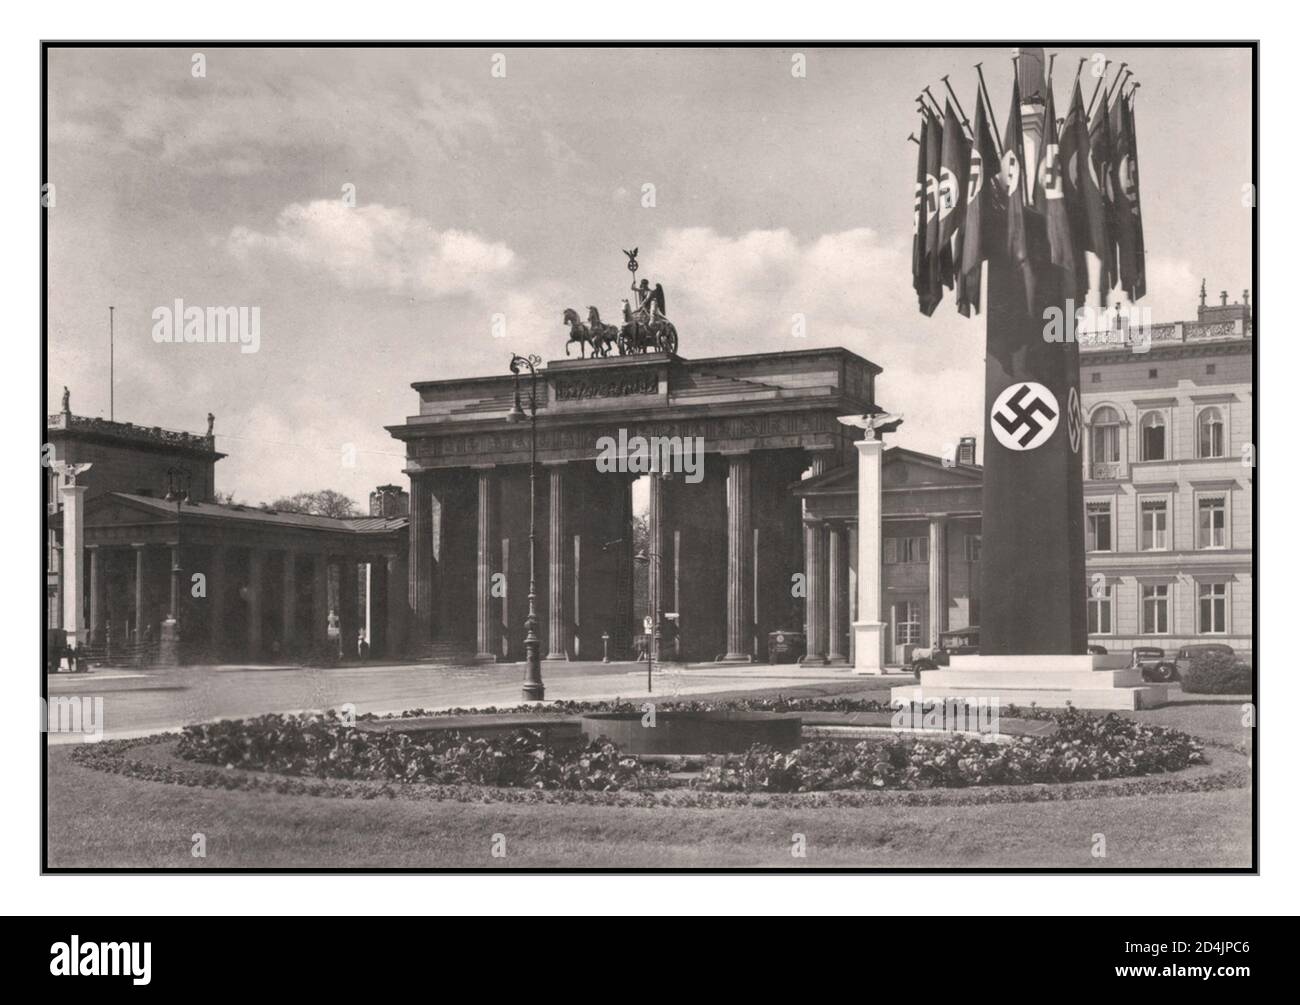 1930’s Berlin Nazi Germany Brandenburg Gate, Pariser Platz with Nazi Swastika Flags Berlin Germany  1930’s Stock Photo